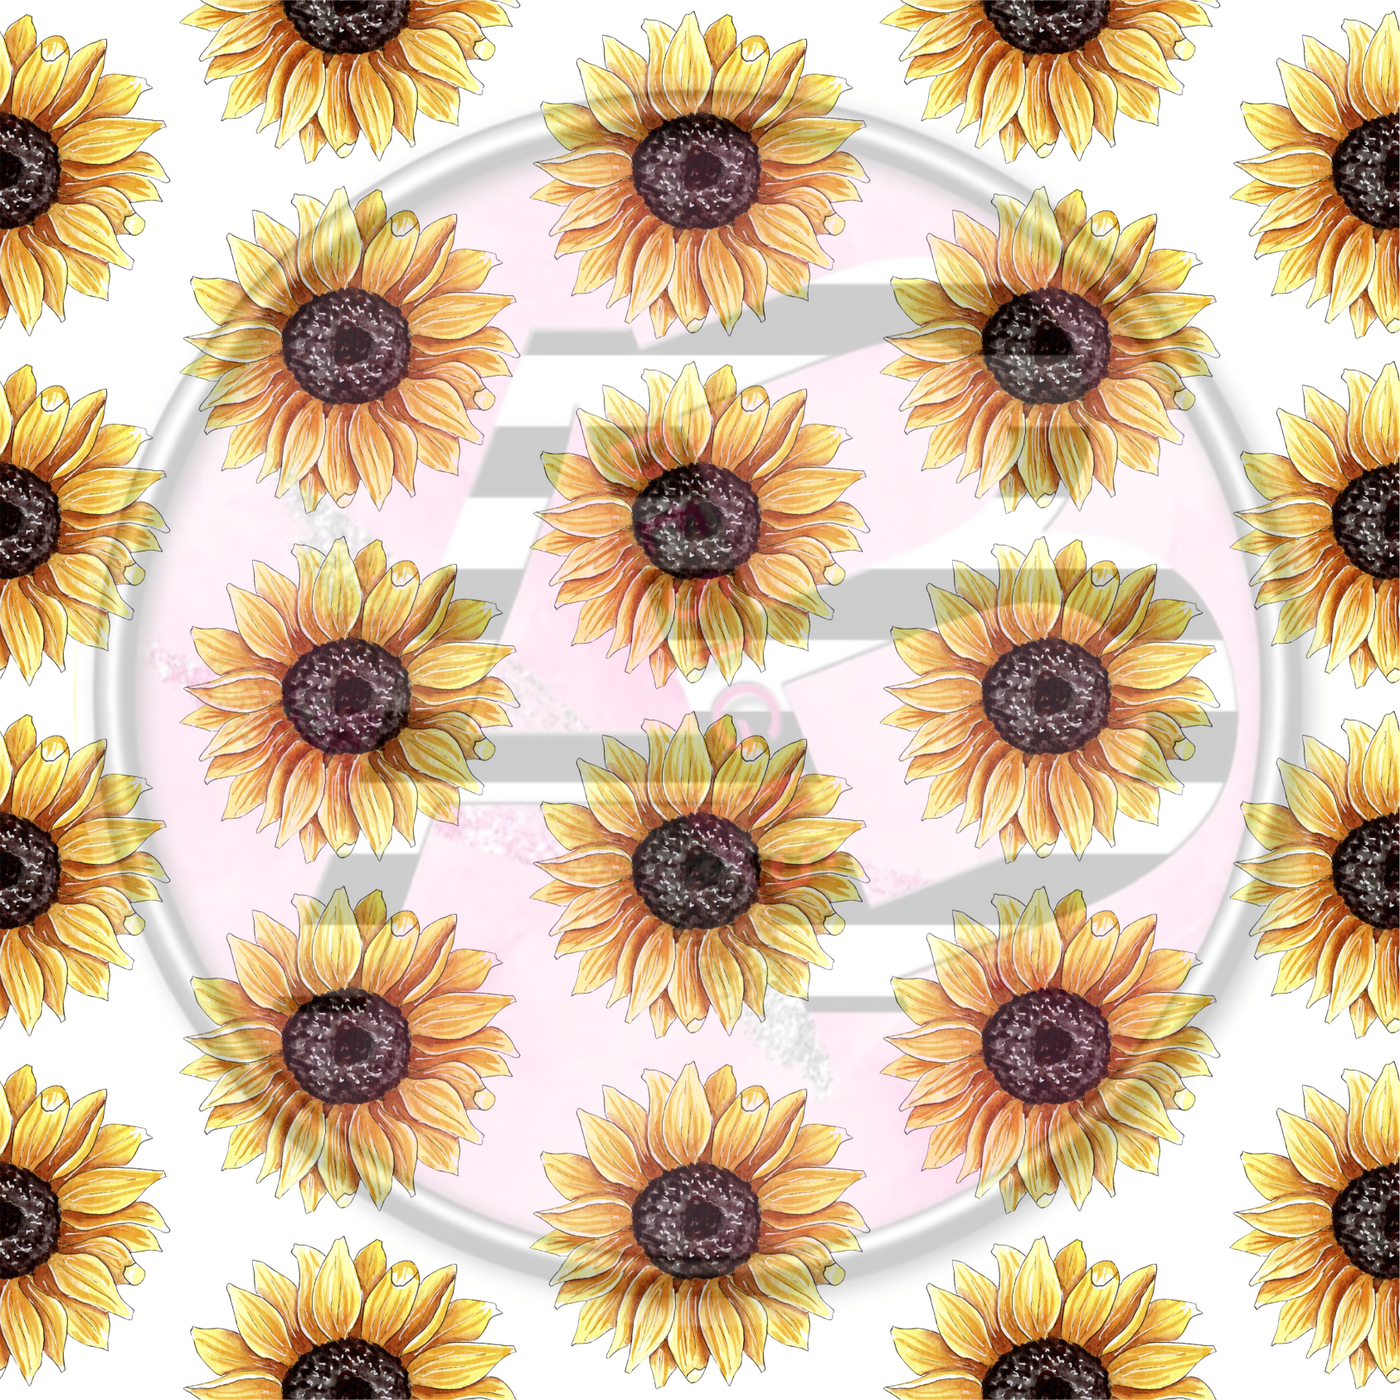 Adhesive Patterned Vinyl - Sunflower 15